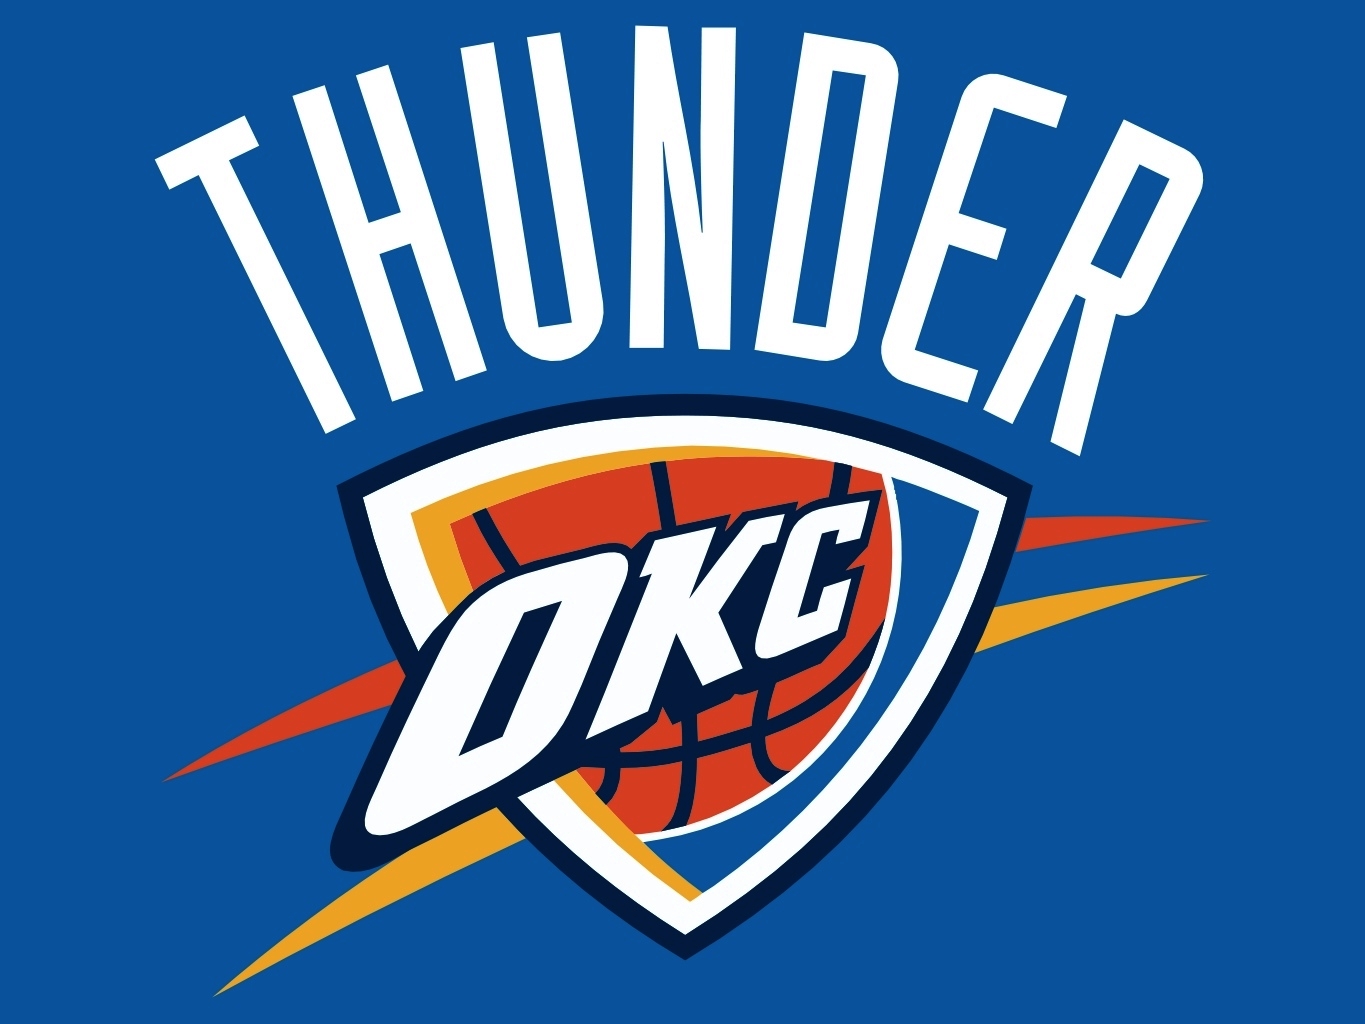 Oklahoma City Thunder HD wallpapers, Desktop wallpaper - most viewed